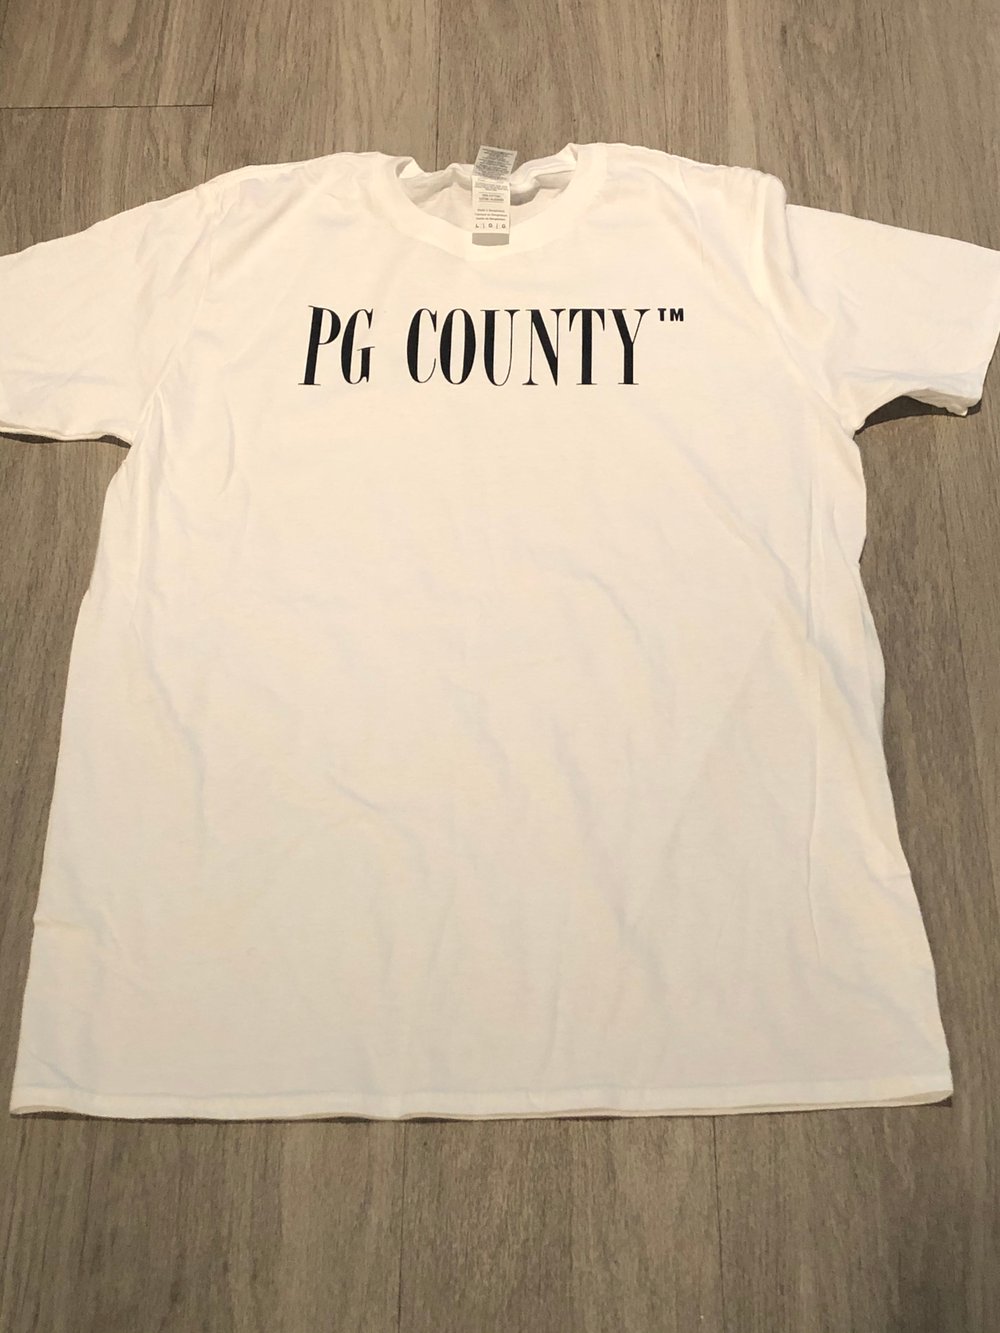 PG County - Reflective Vinyl